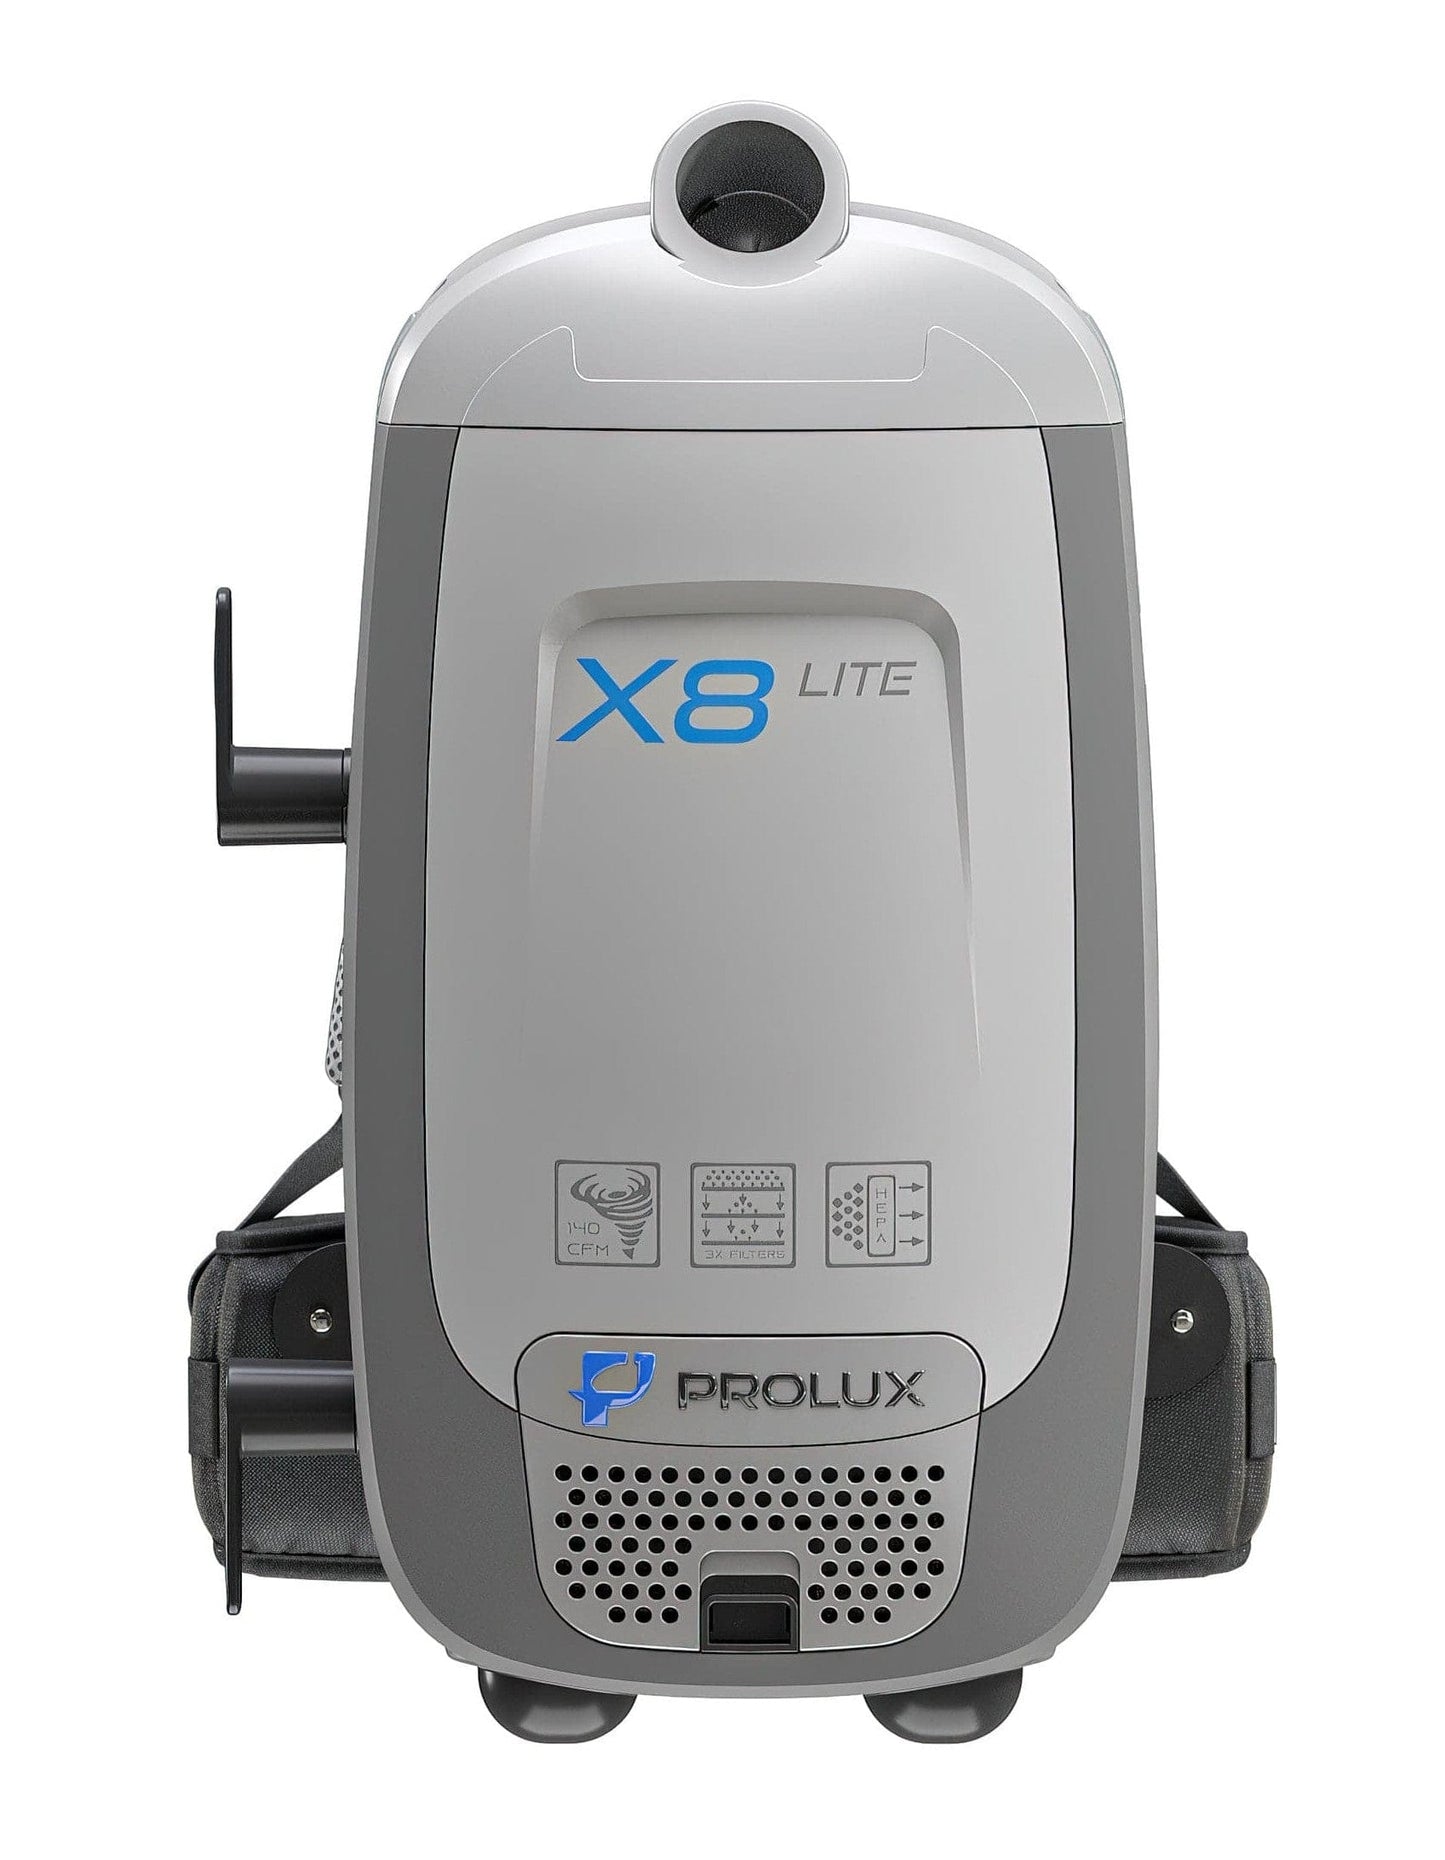 DEMO Prolux X8 Lite Backpack Vacuum w/ Premium Tool Kit